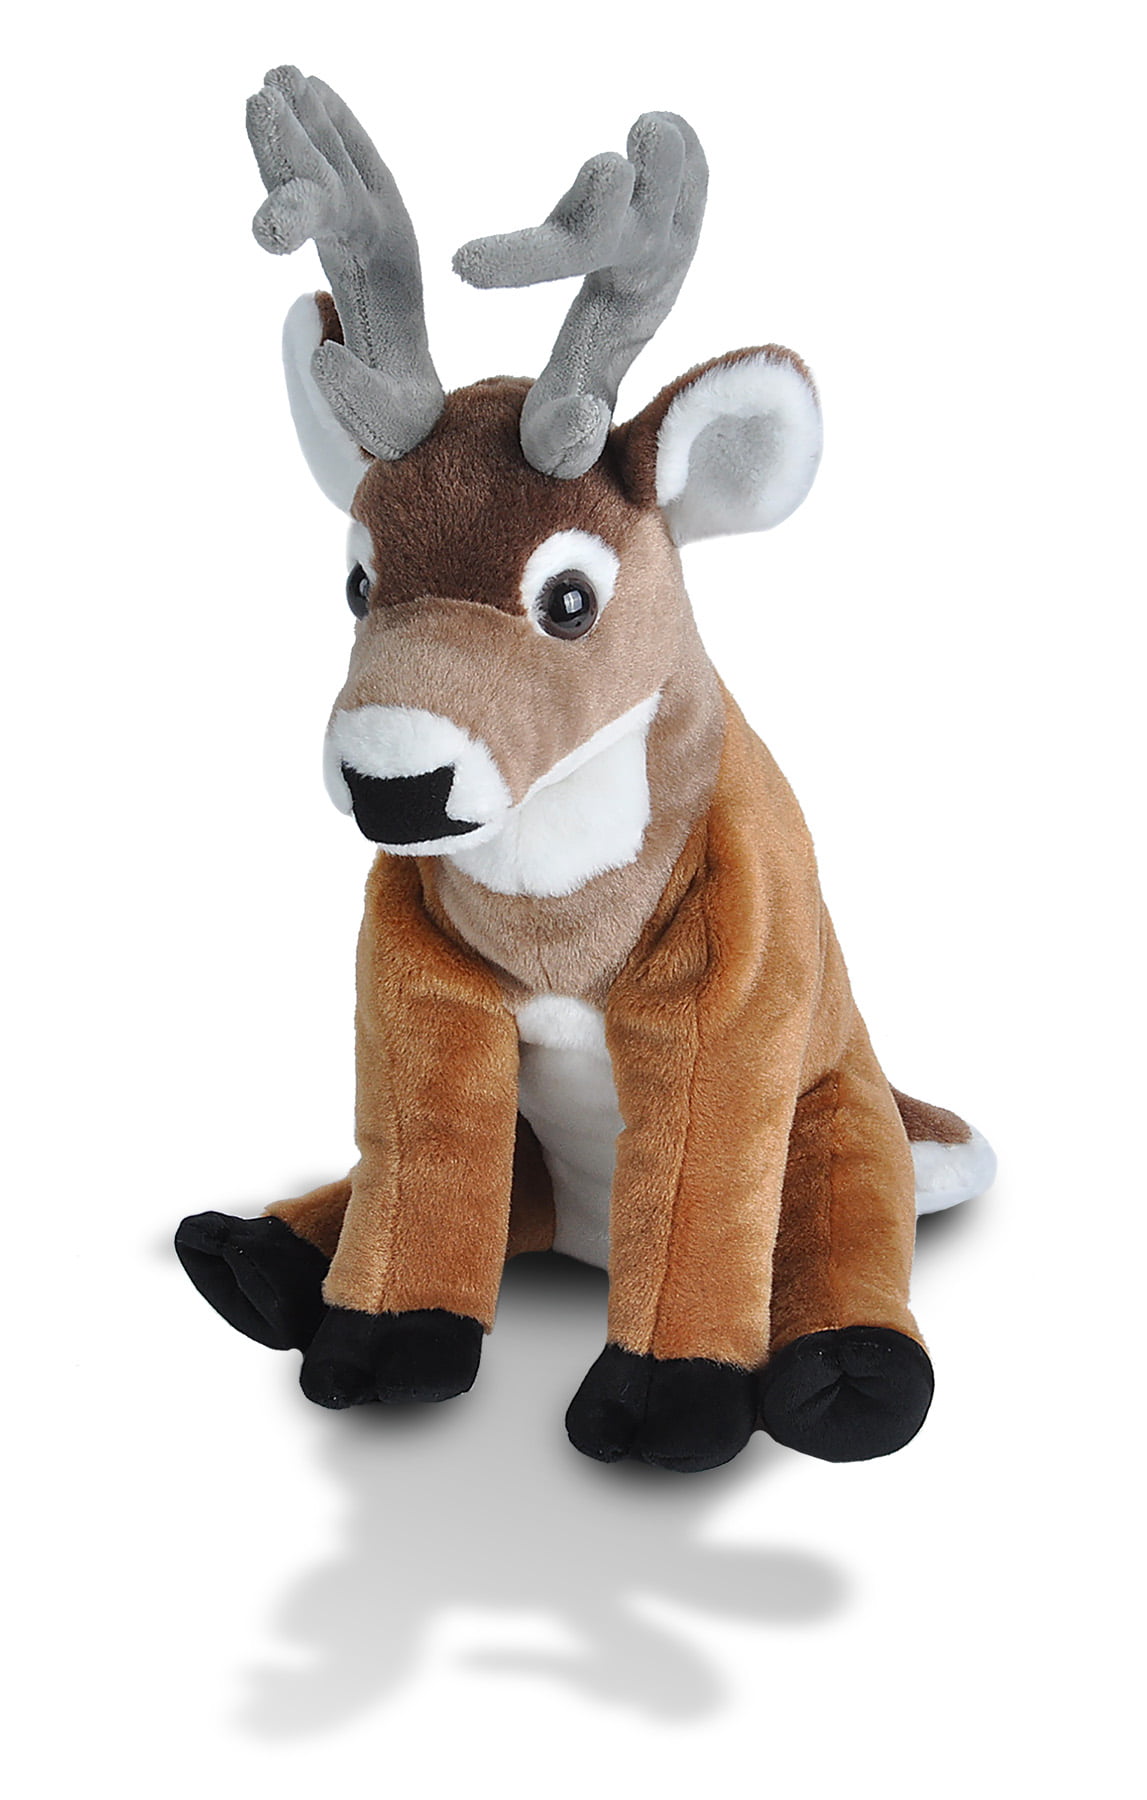 Stuffed Animal Plush Toy Gifts for Kids Wild Republic White-Tailed Buck Plush Cuddlekins 12 Inches 